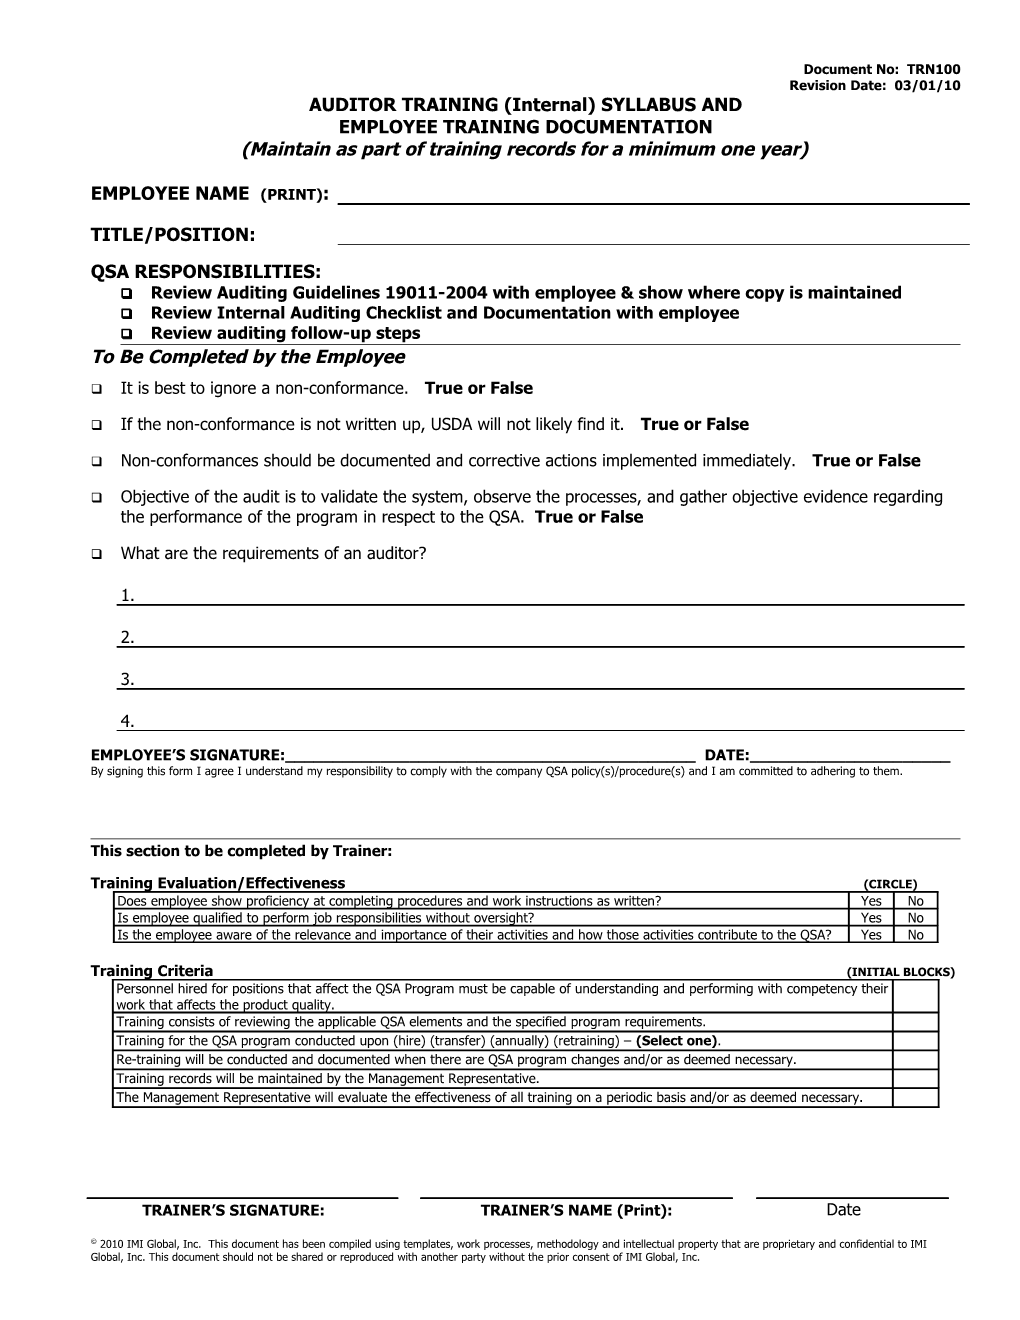 Internal Audit Form (4